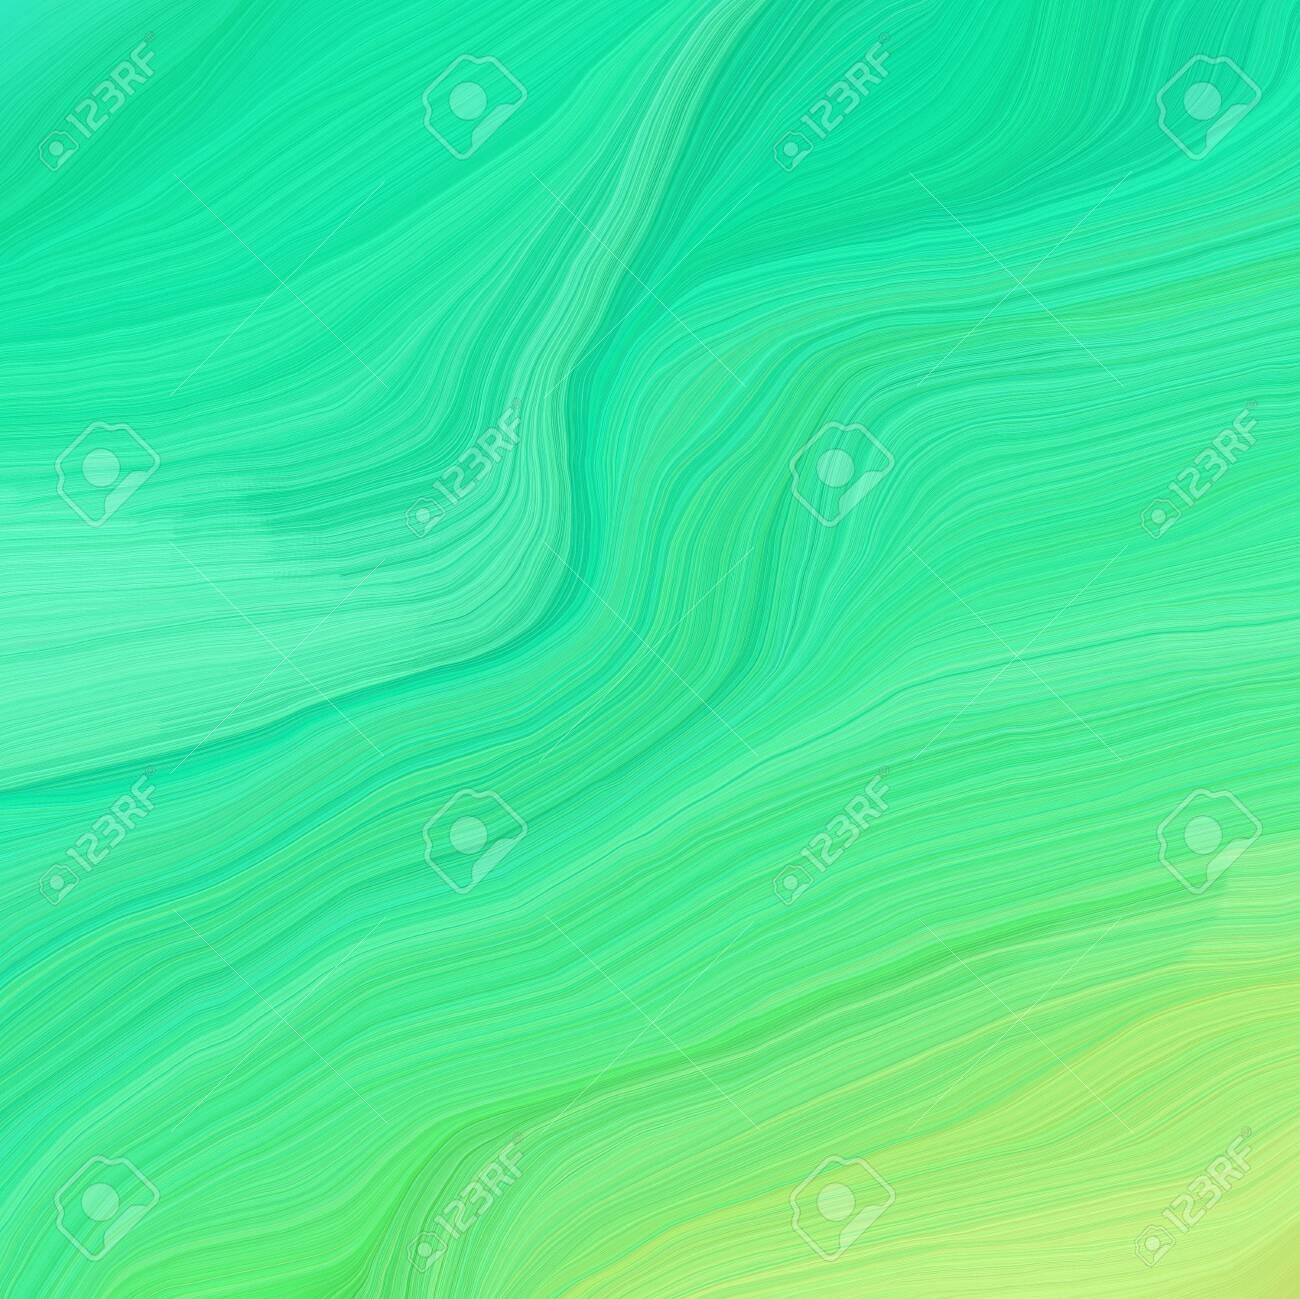 Square Graphic Illustration With Turquoise Medium Spring Green